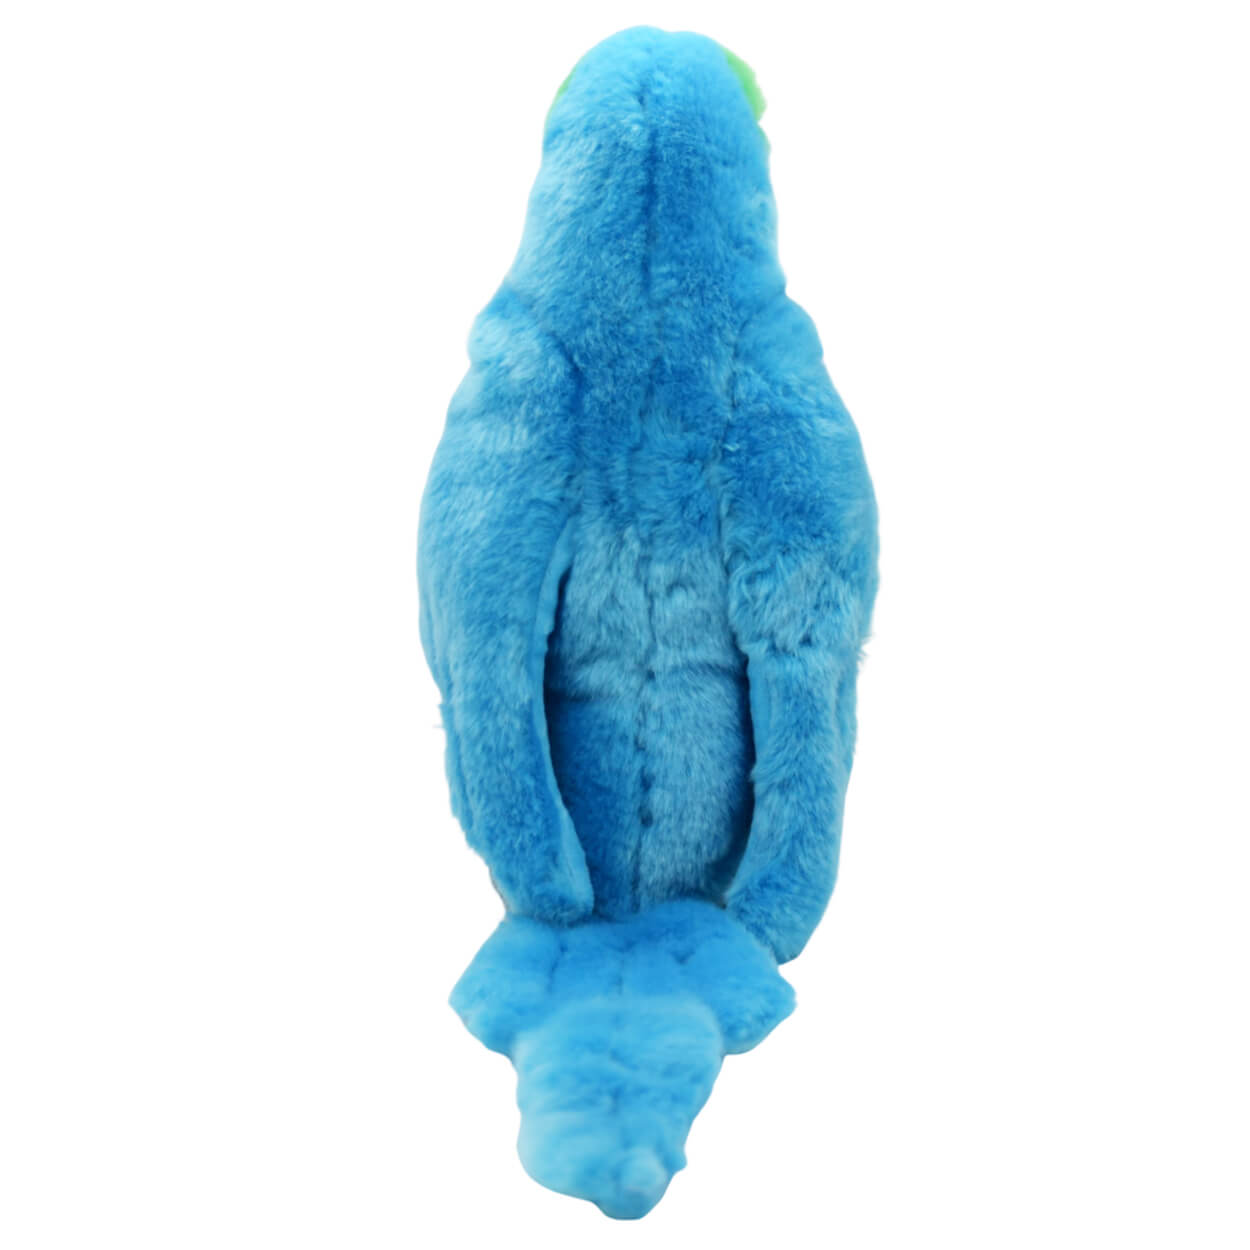 Realistic Macaw Parrot Stuffed Animal Plush Toy